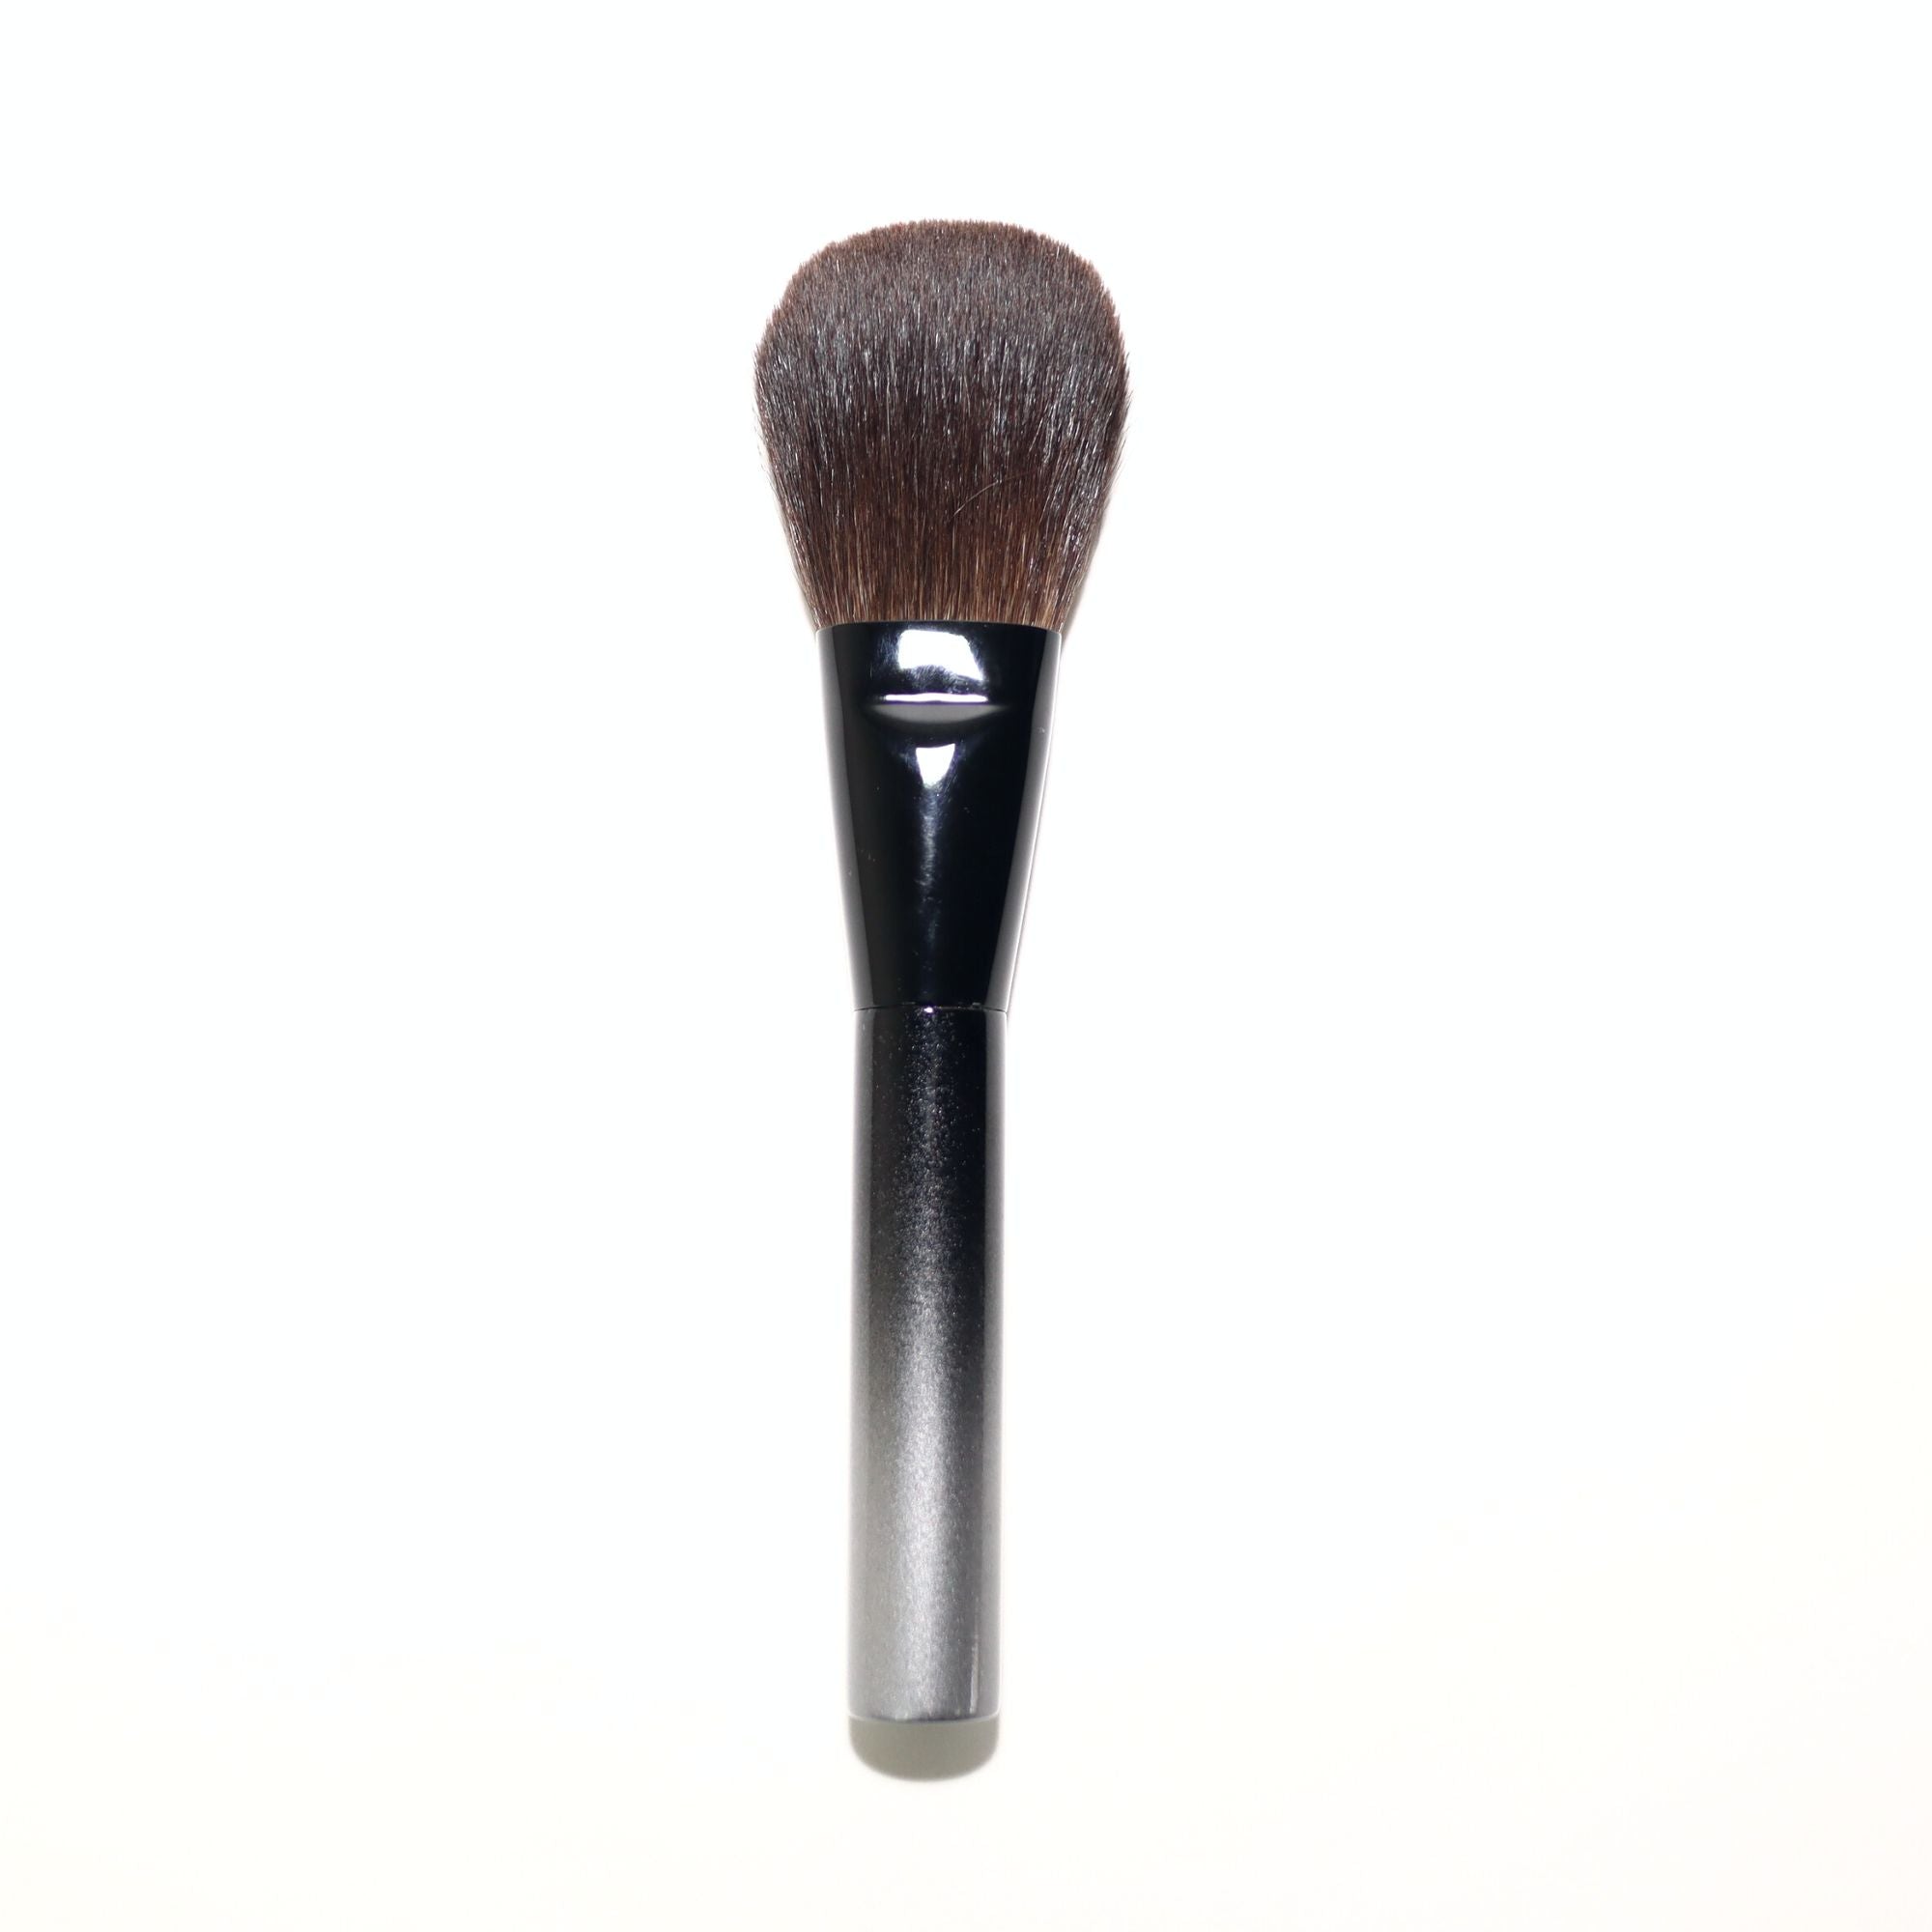 Koyudo Yoshiki Metallic Monochrome Gradient Powder Brush (Limited Edition) - Fude Beauty, Japanese Makeup Brushes